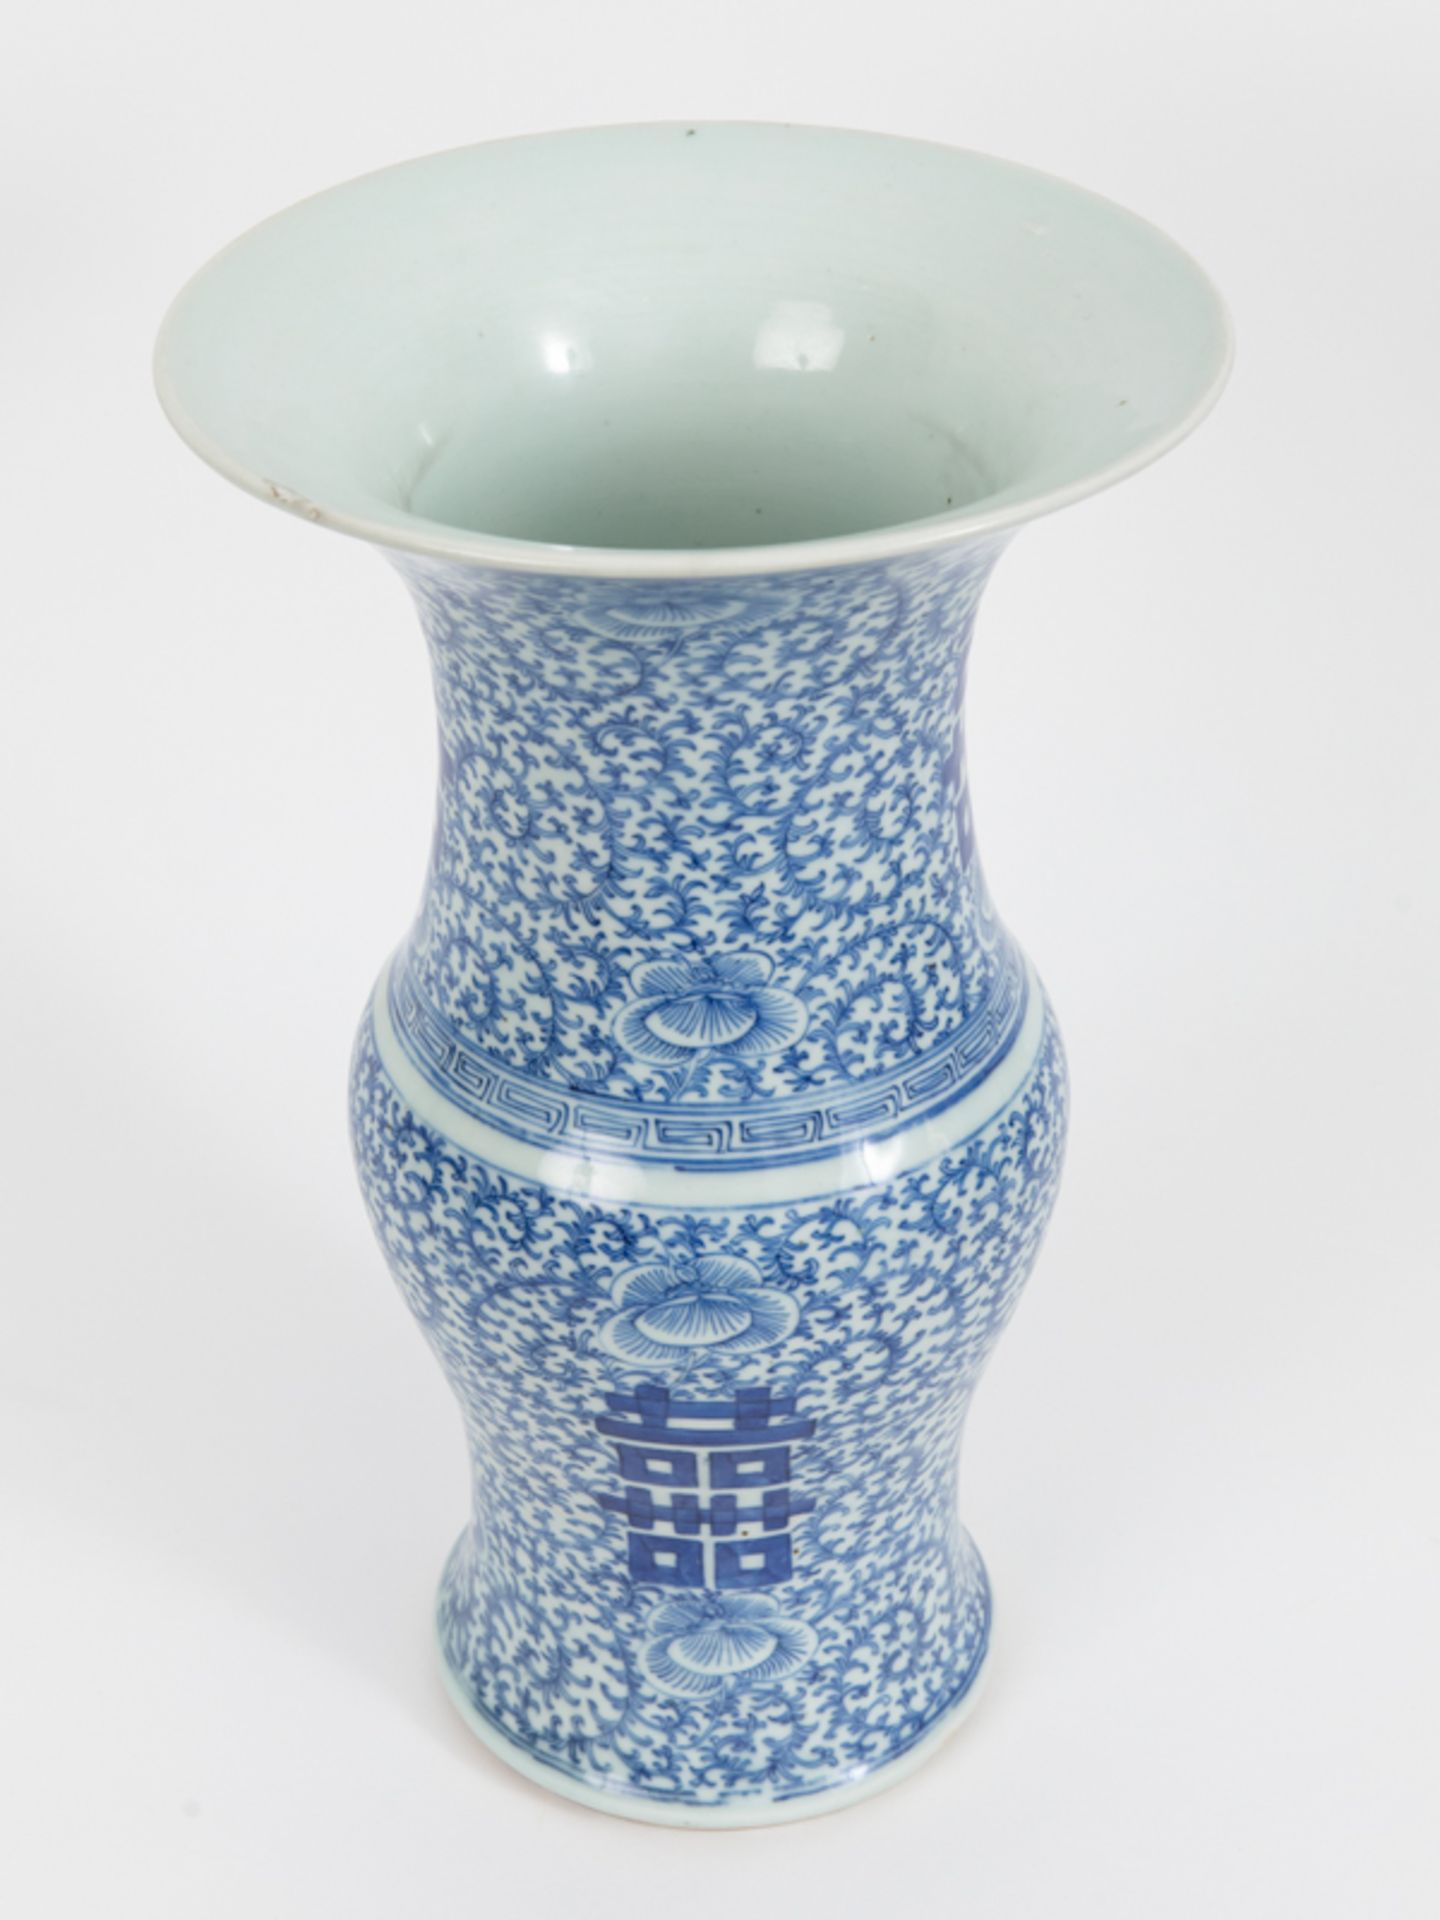 Balustervase mit GlÃ¼ckssymbolik, China, Qing-Dynastie, 18./19. Jh. brPorzellan mit unter Glasur - Image 3 of 5